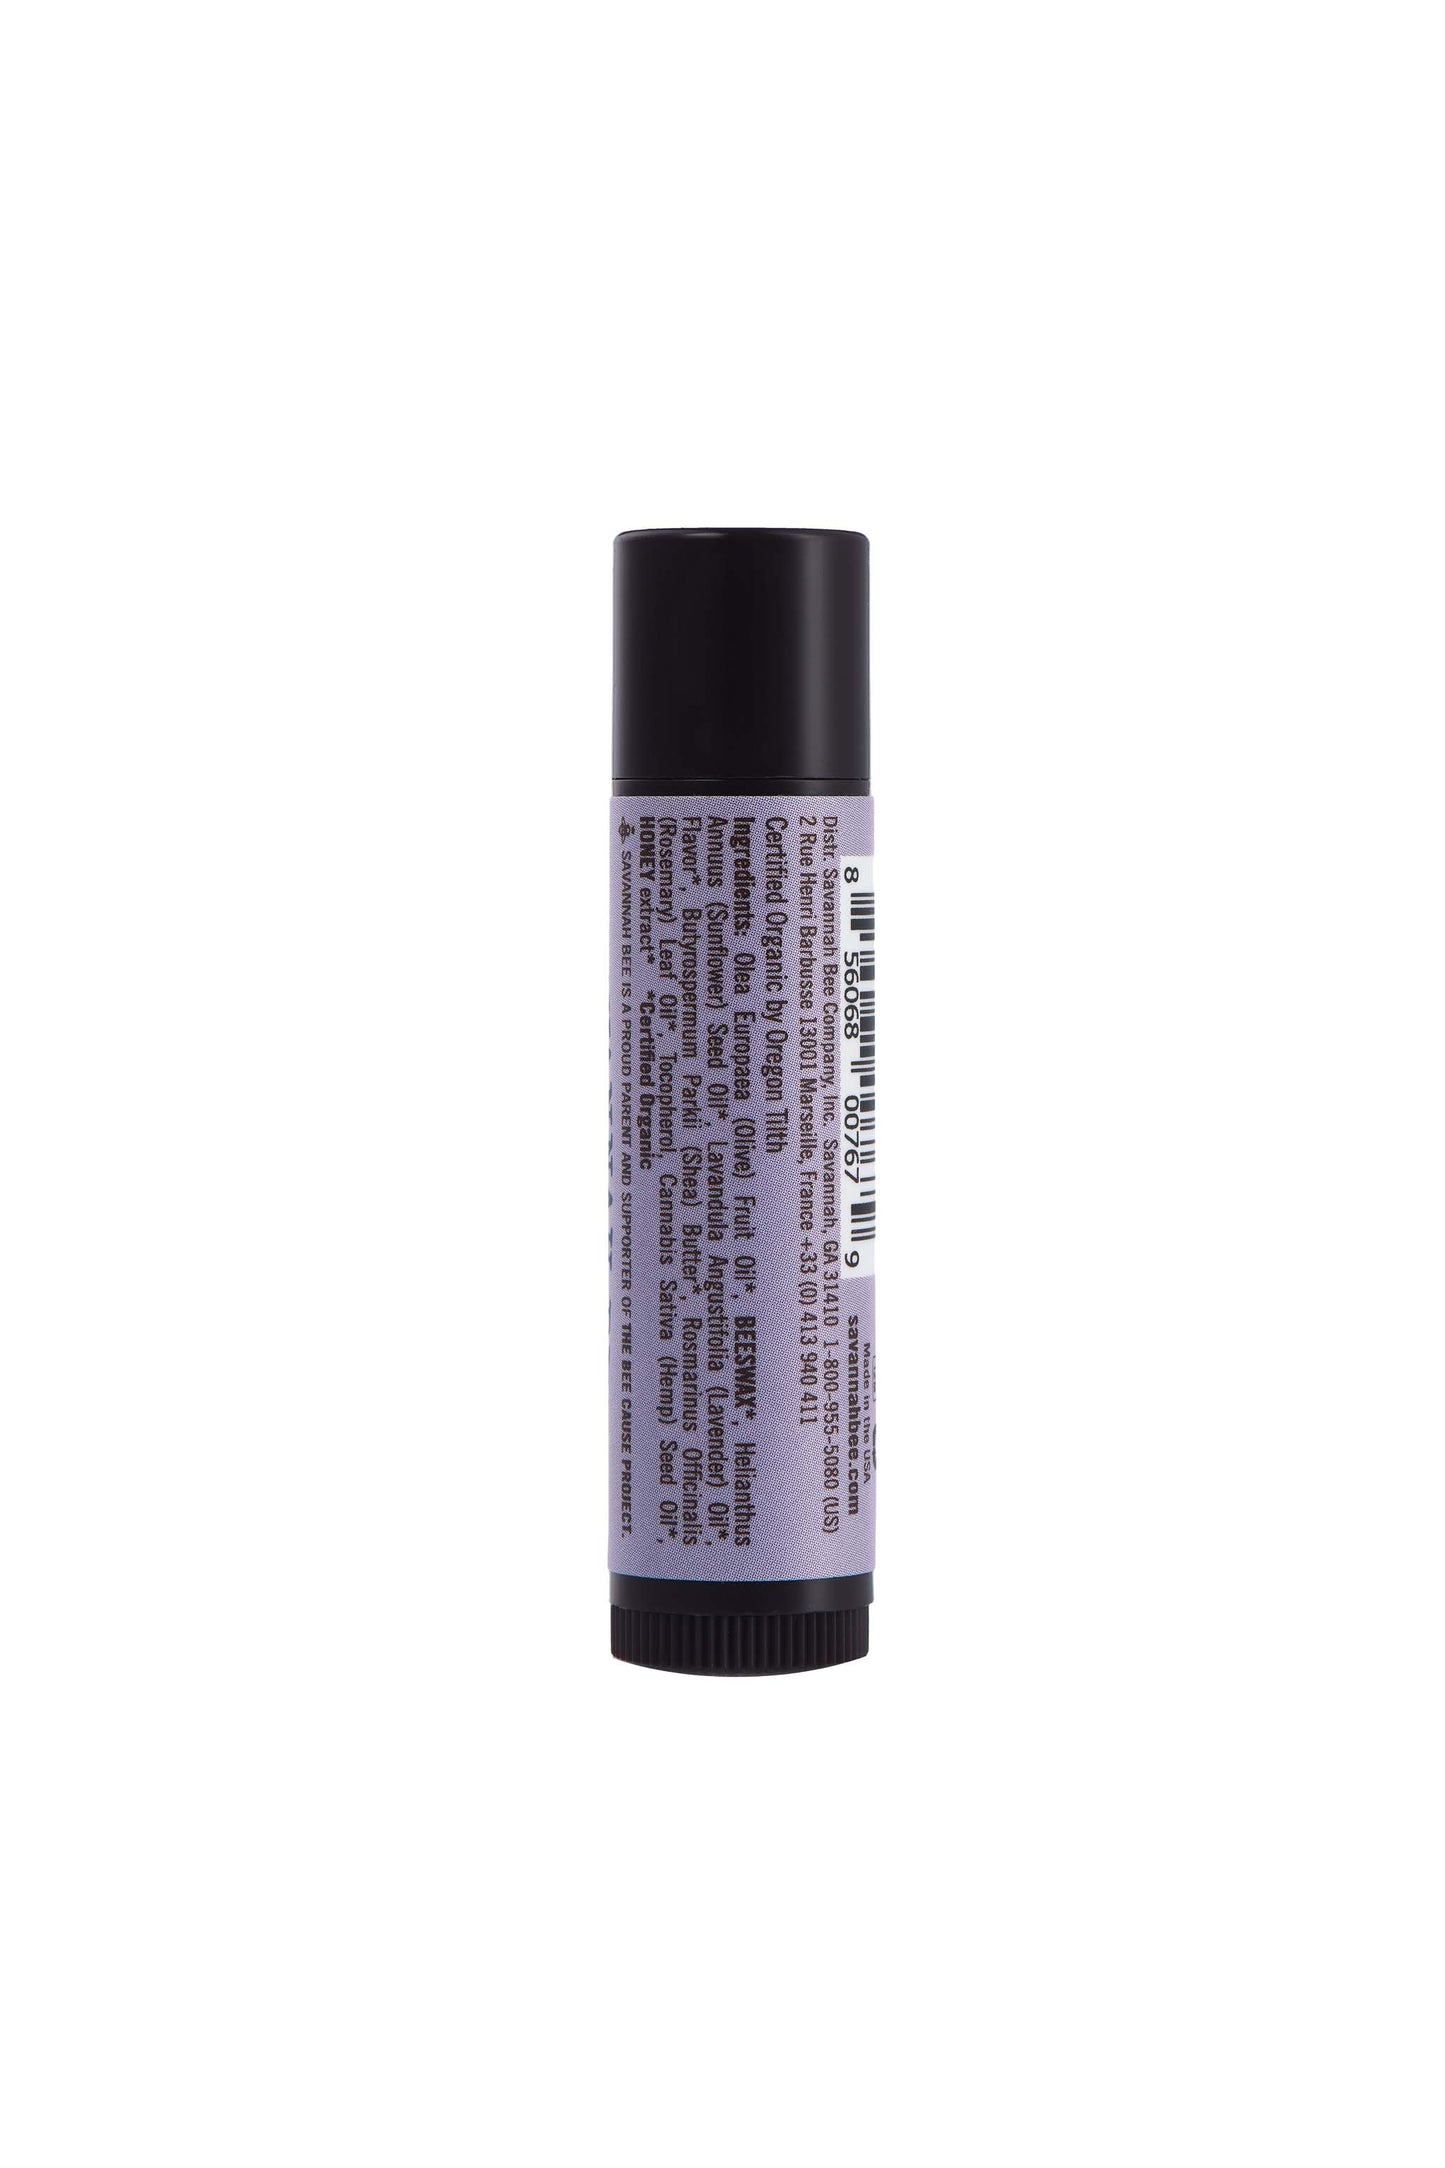 Rosemary Lavender Honey & Beeswax Lip Balm purple lipstick tube.